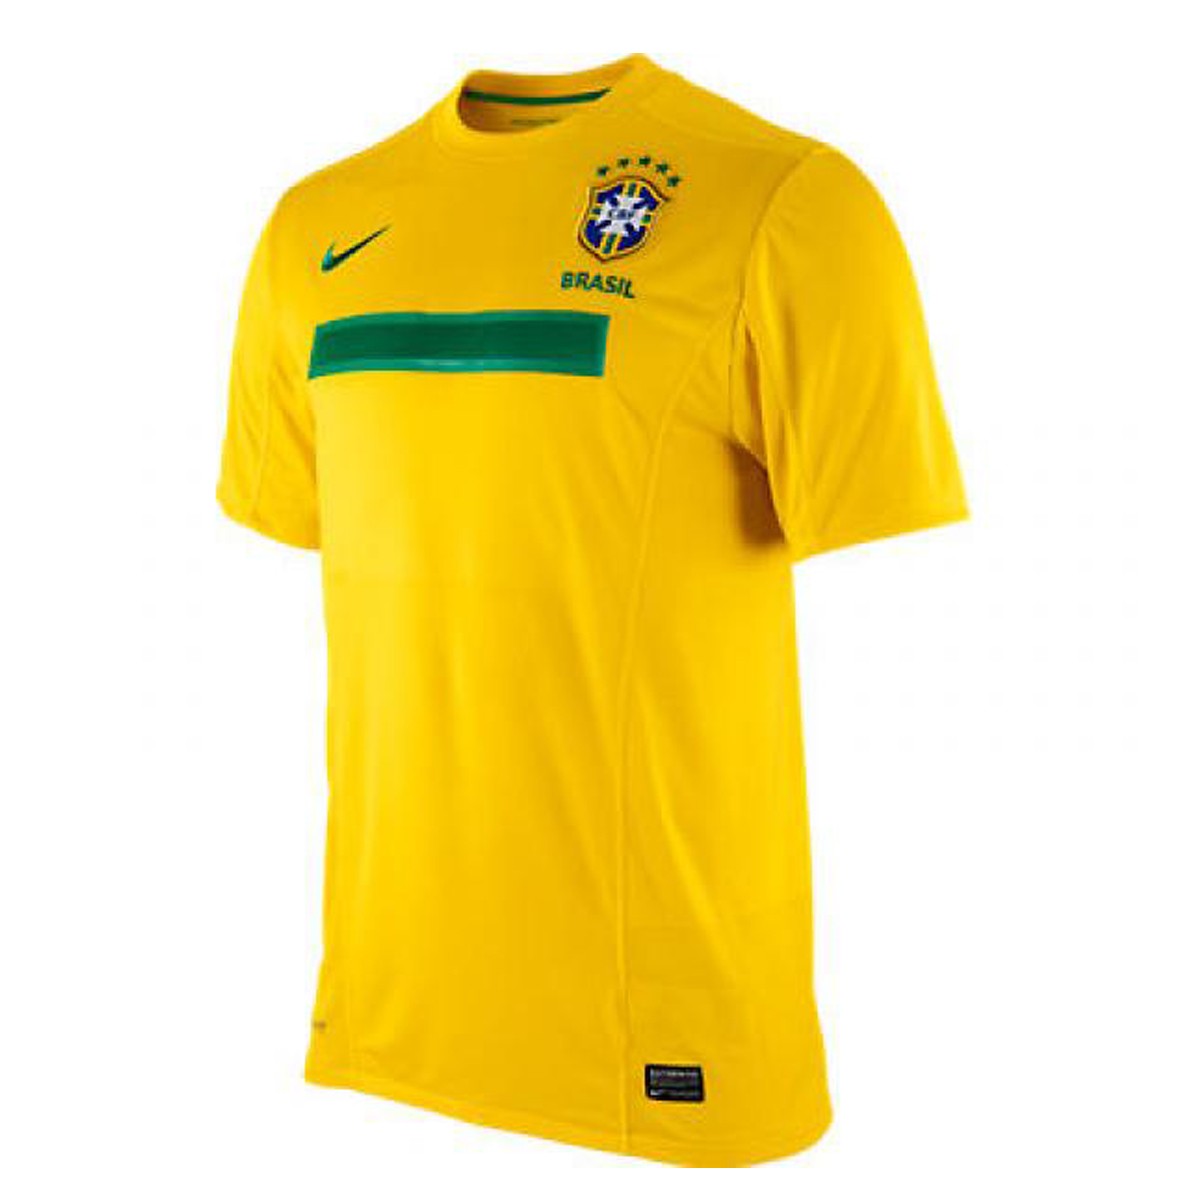 Brazil jersey 2012 Nike